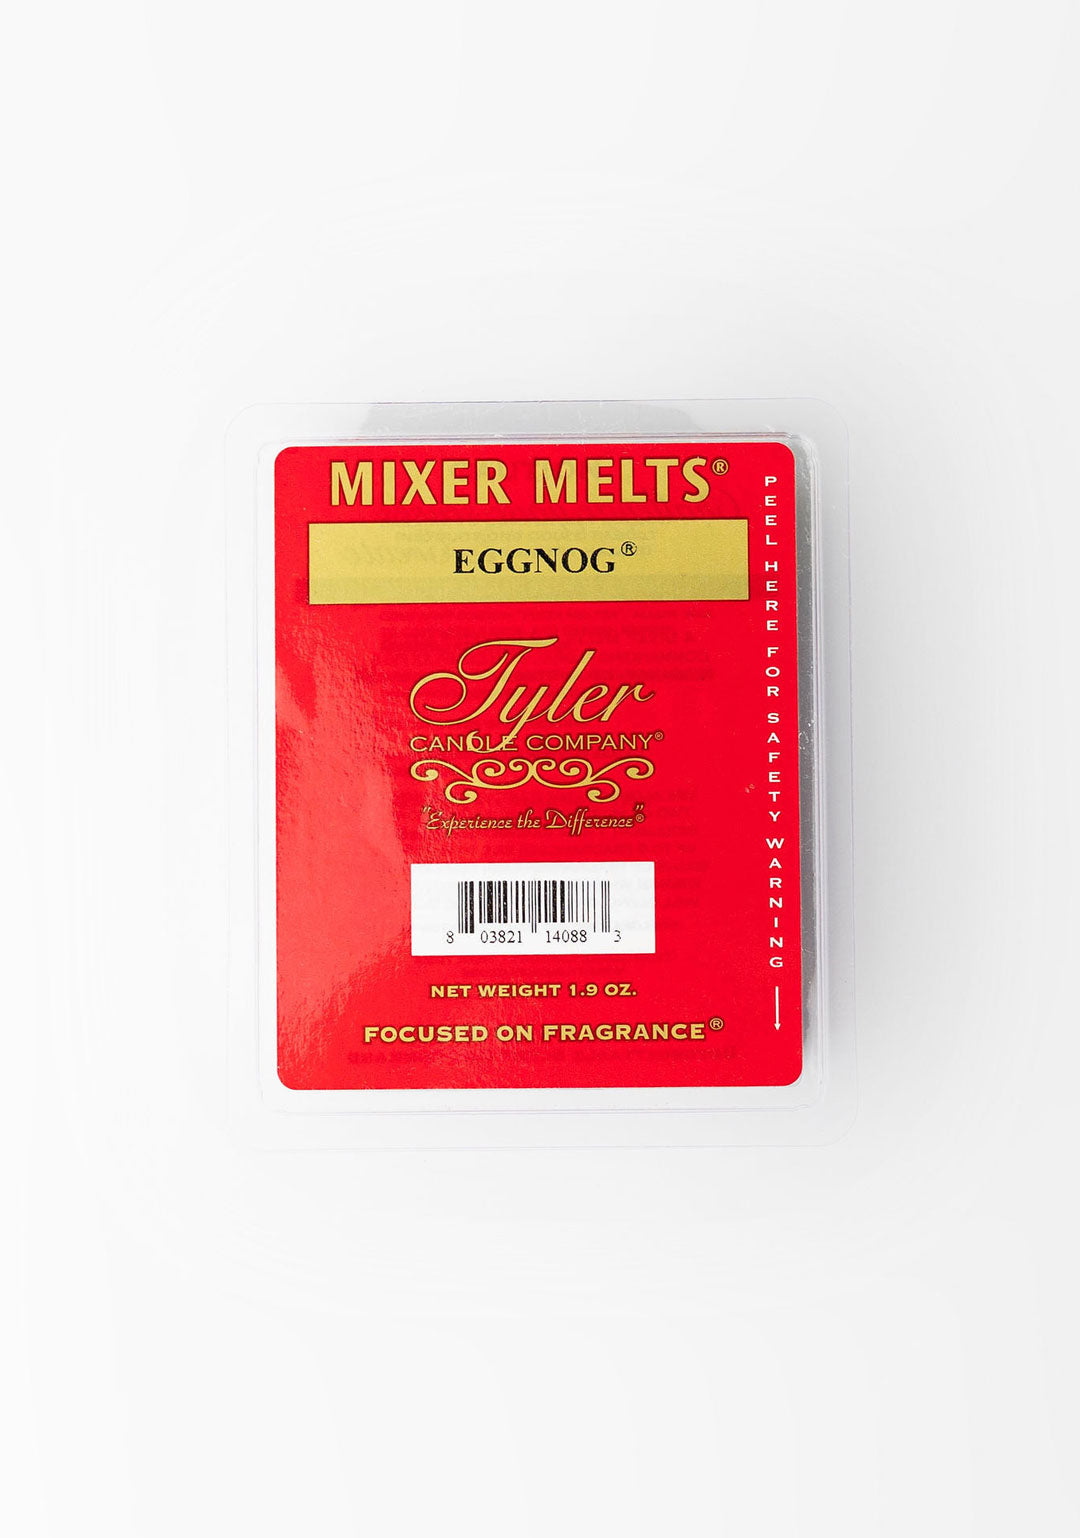 Mixer Melts Holiday Prestige®